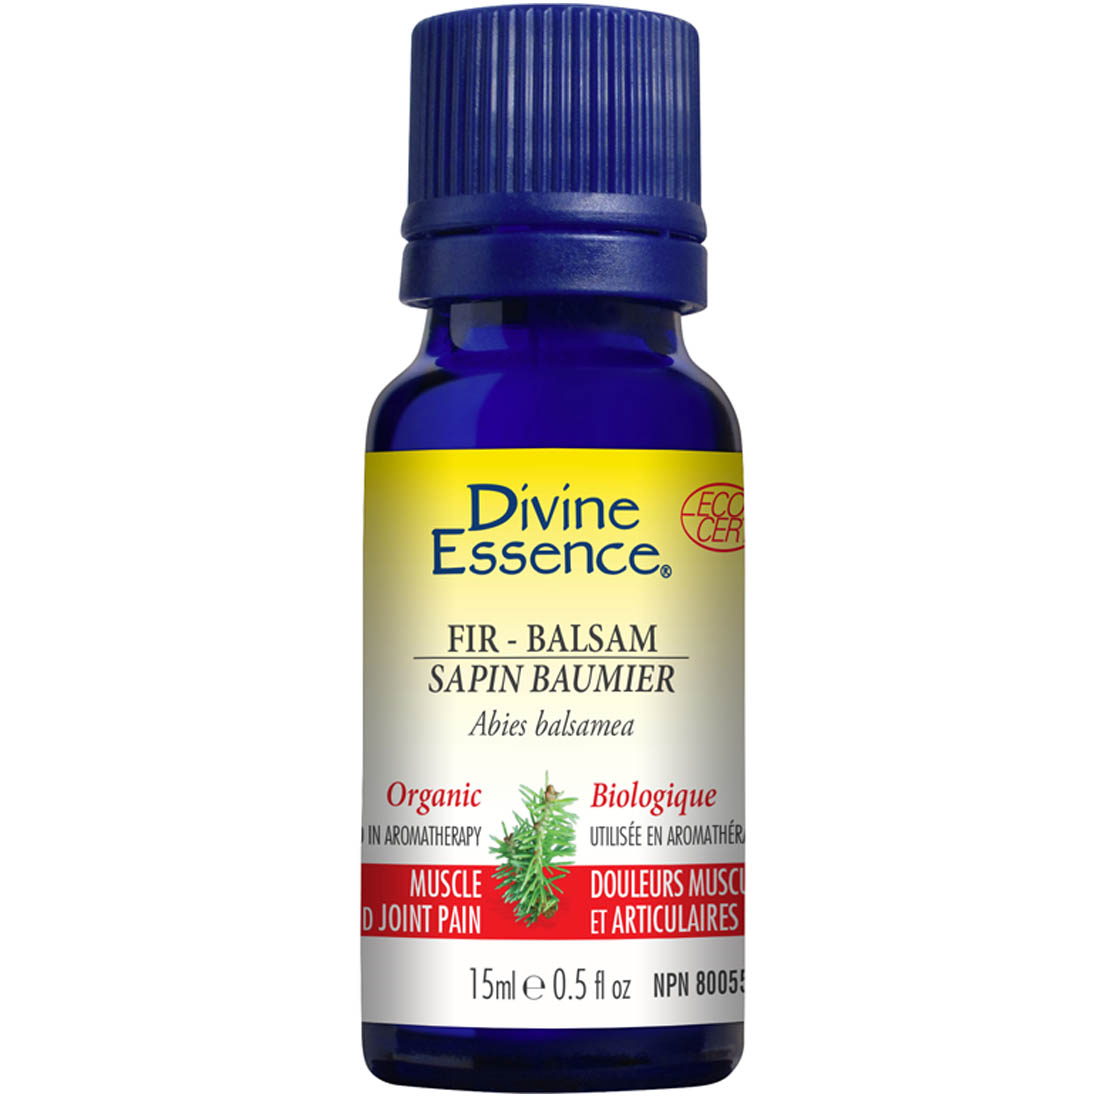 Divine Essence Fir Balsam Essential Oil (Organic), 15ml